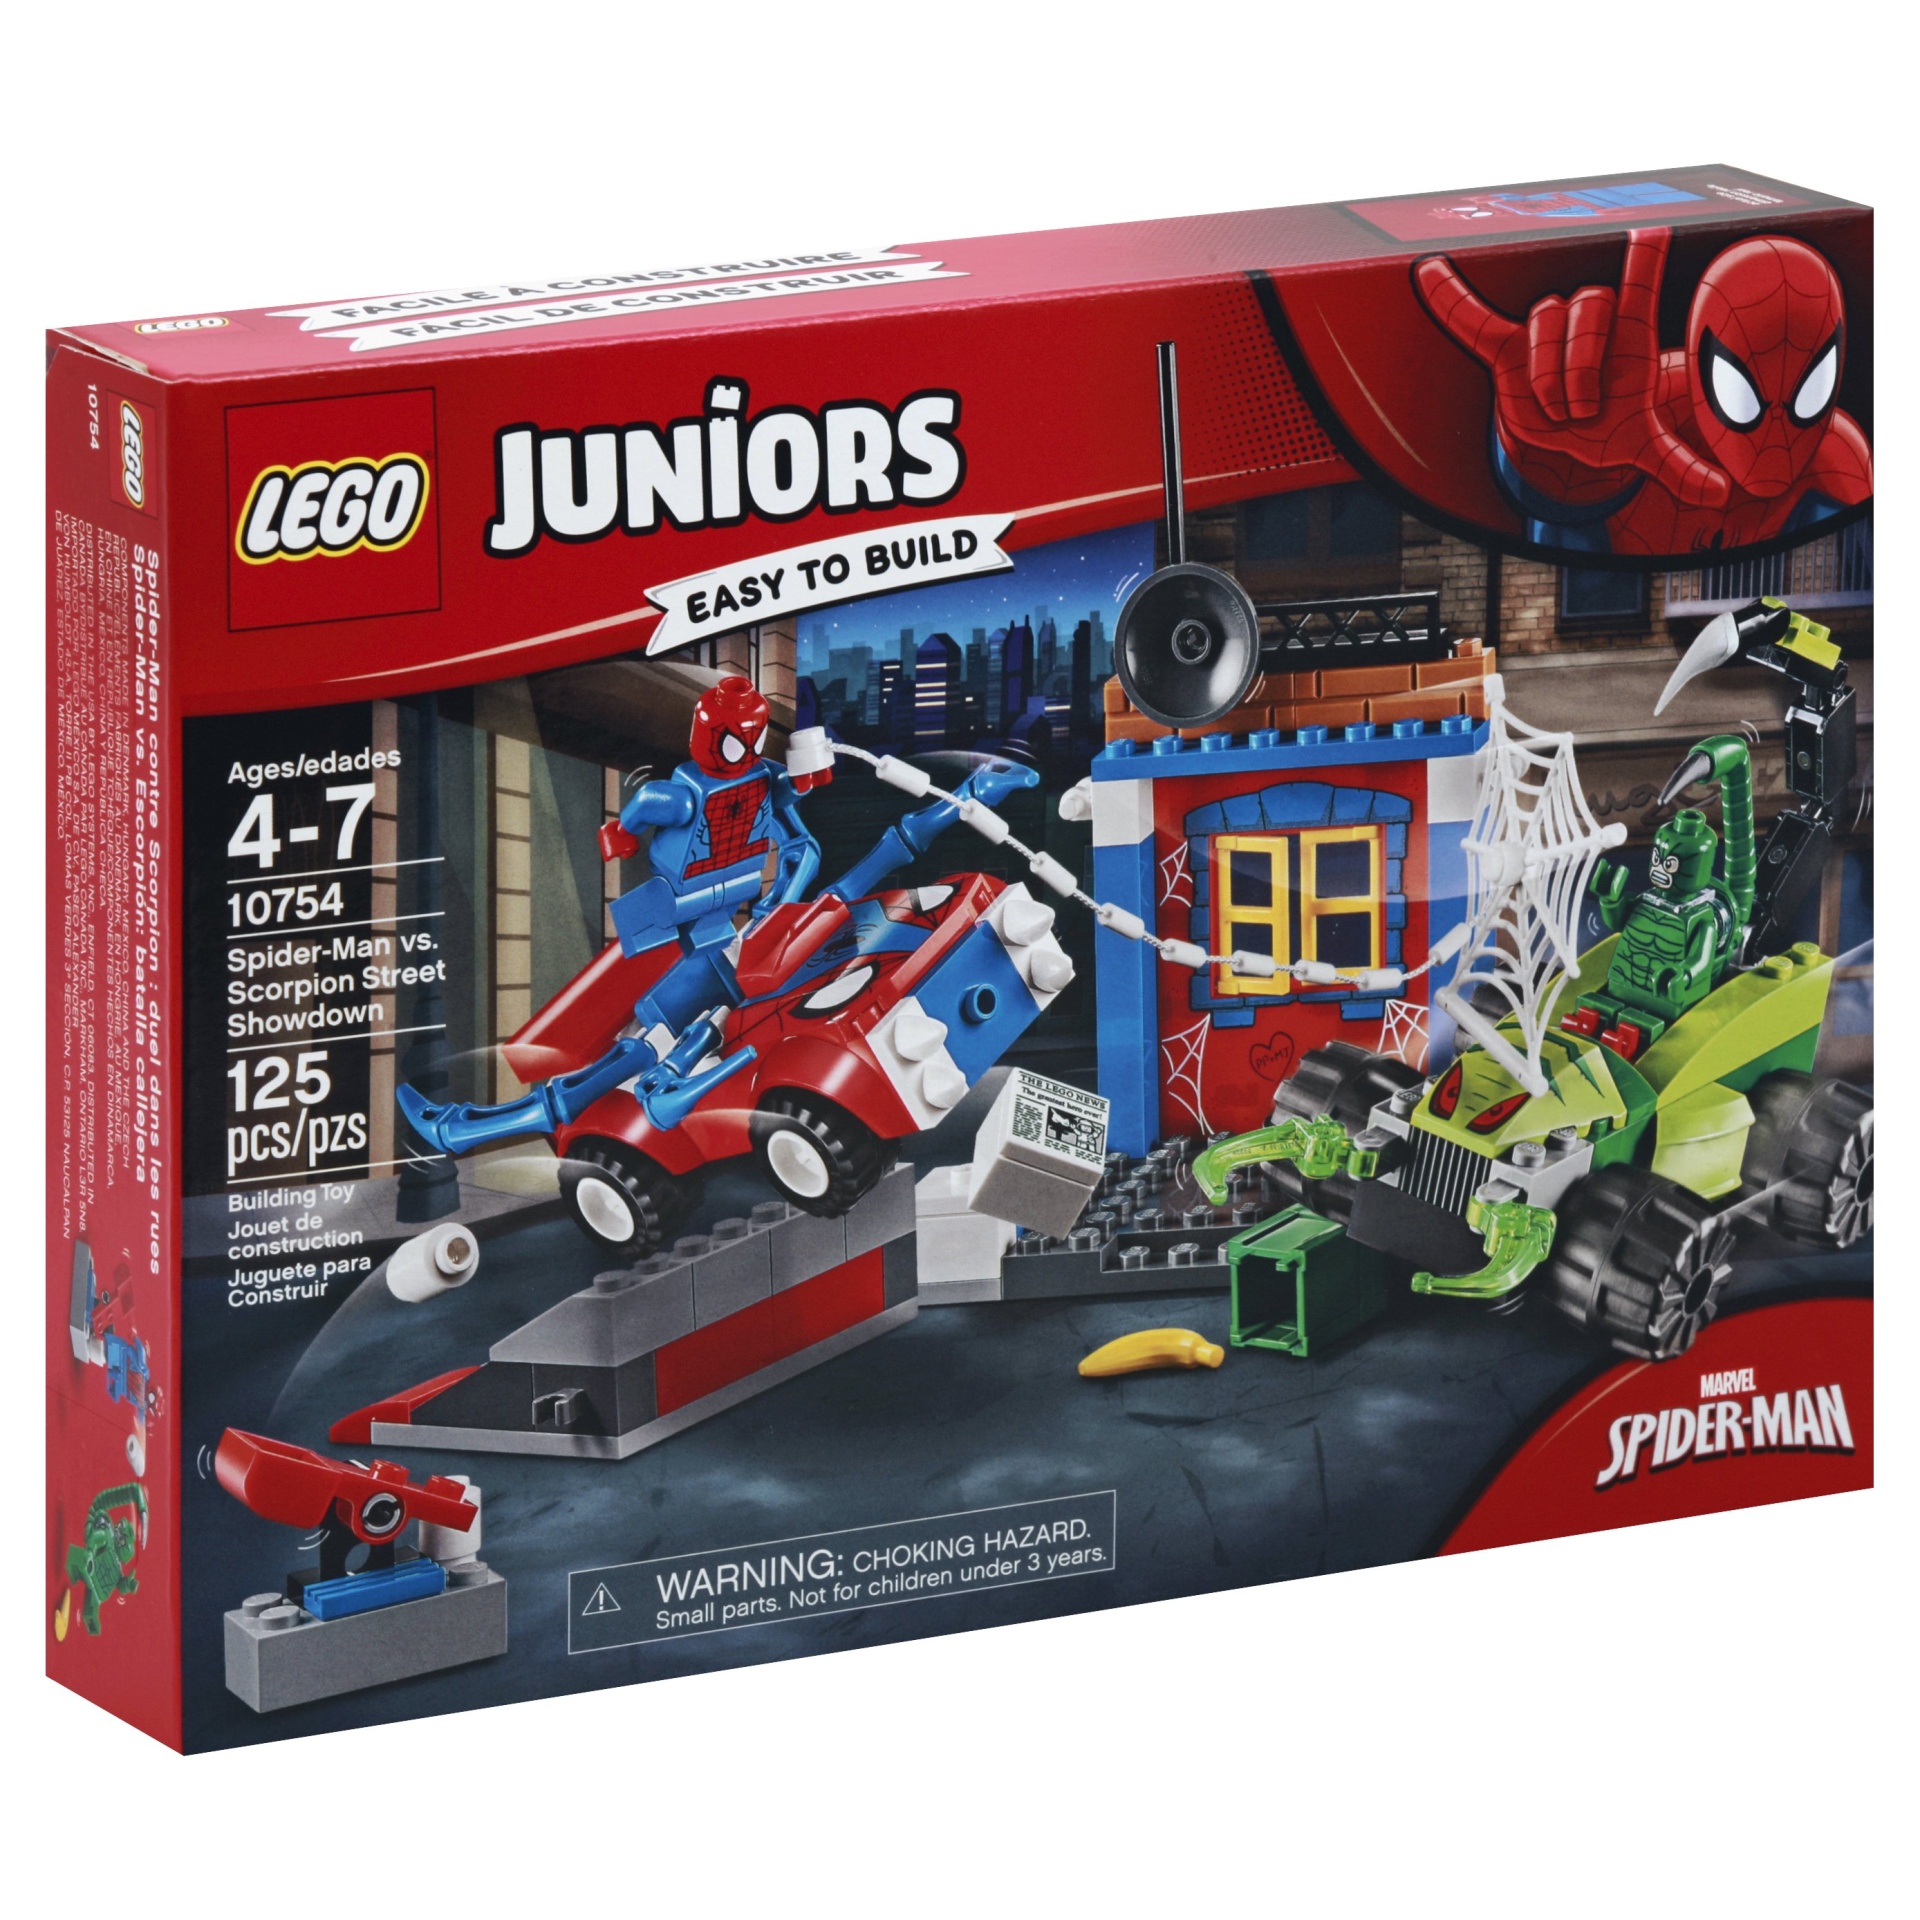 slide 1 of 1, LEGO Juniors Spider-Man Vs. Scorpion Street Showdown 10754, 1 ct